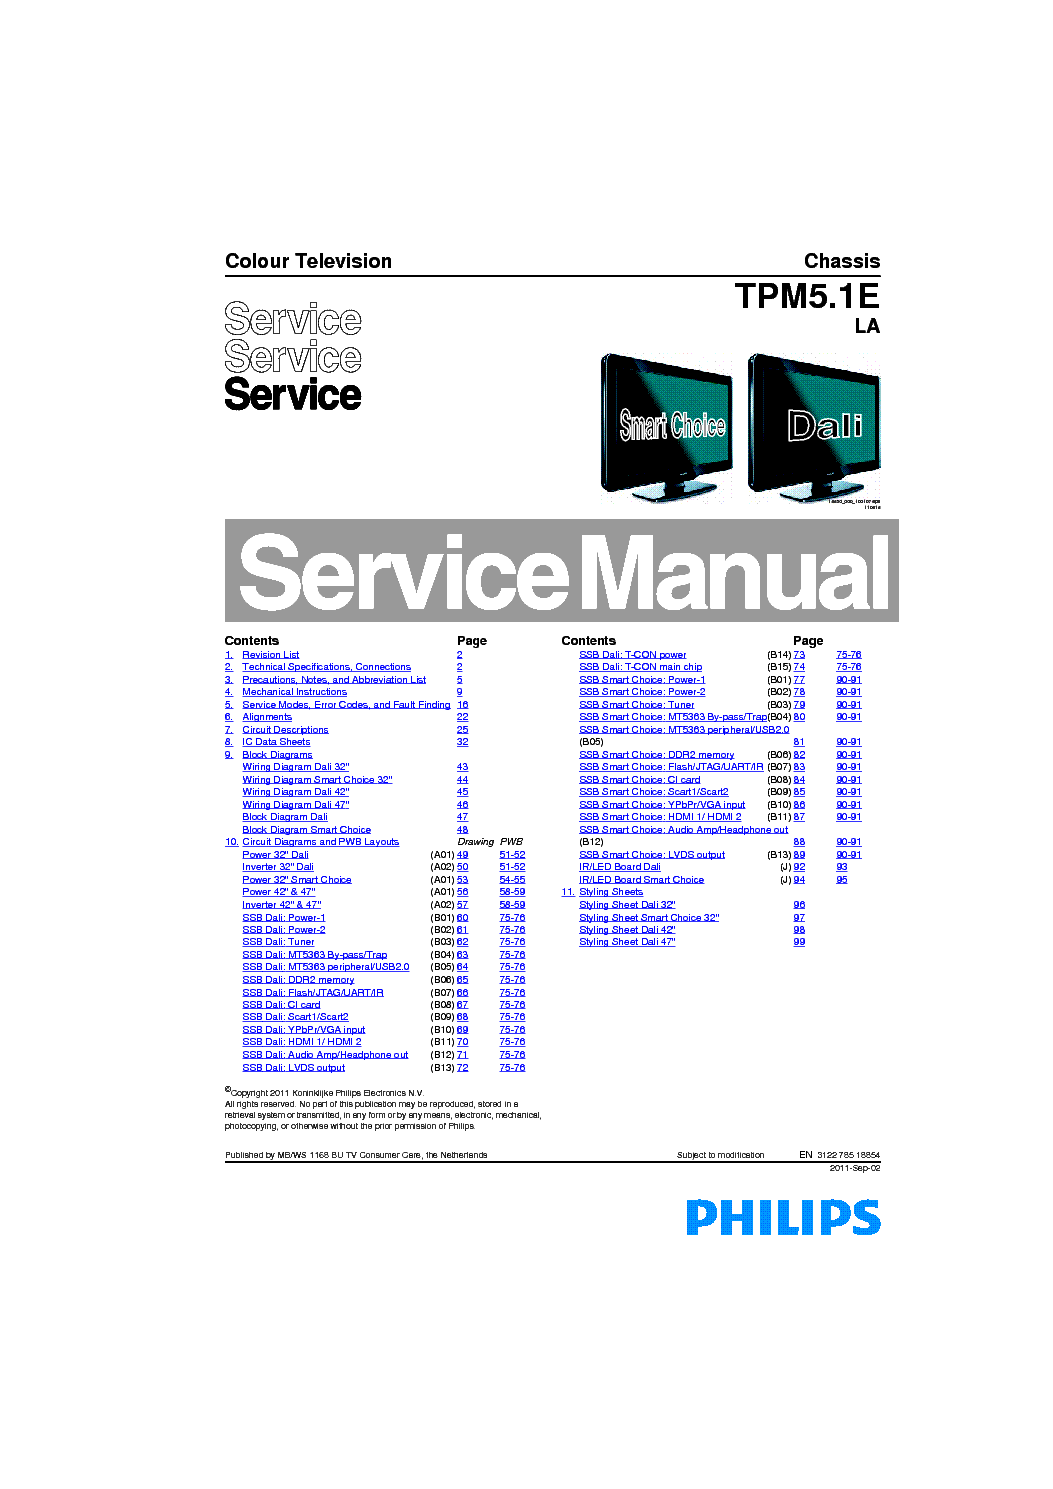 PHILIPS 47PFL3605 H 12 TPM5.1E LA CHASSIS service manual (1st page)